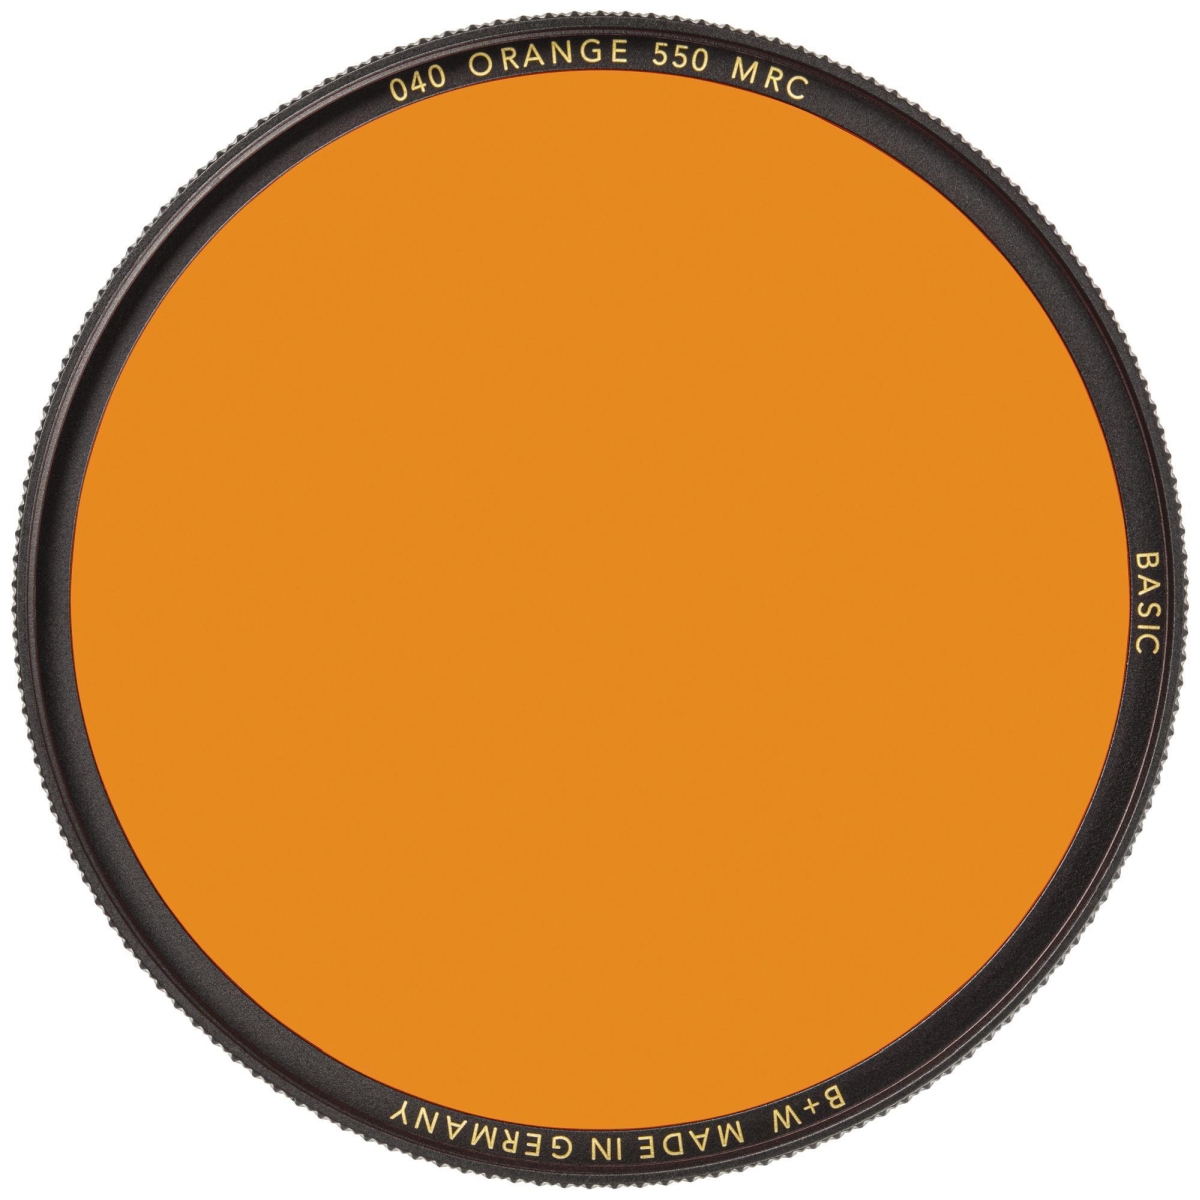 B+W Orange Filter 105 mm 550 MRC Basic